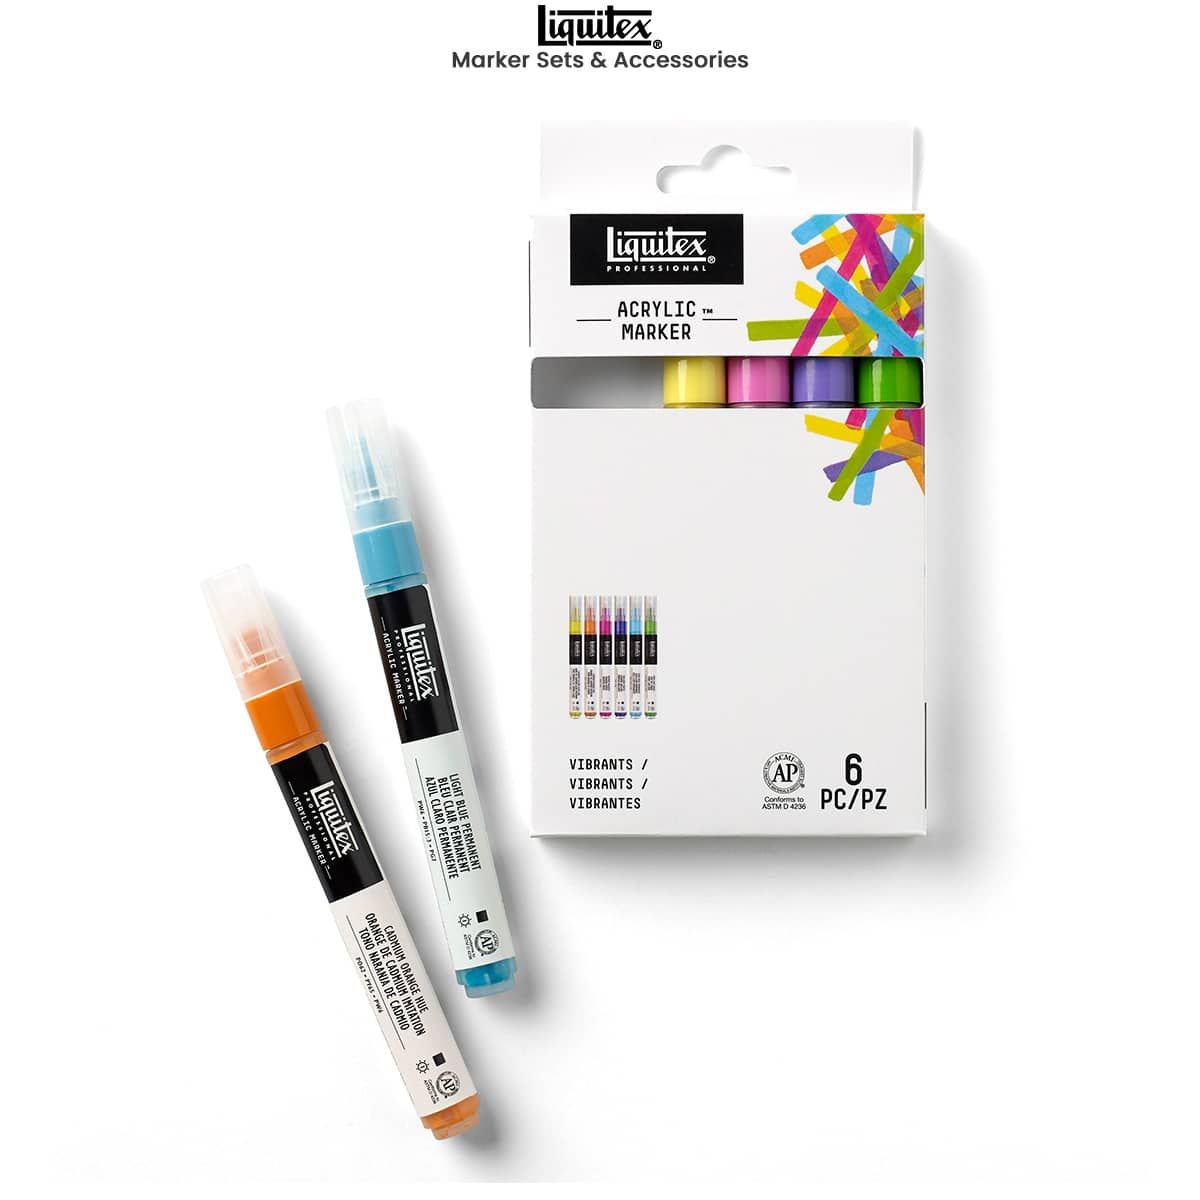 Liquitex Professional Fine Vibrant Paint Marker Set of 6